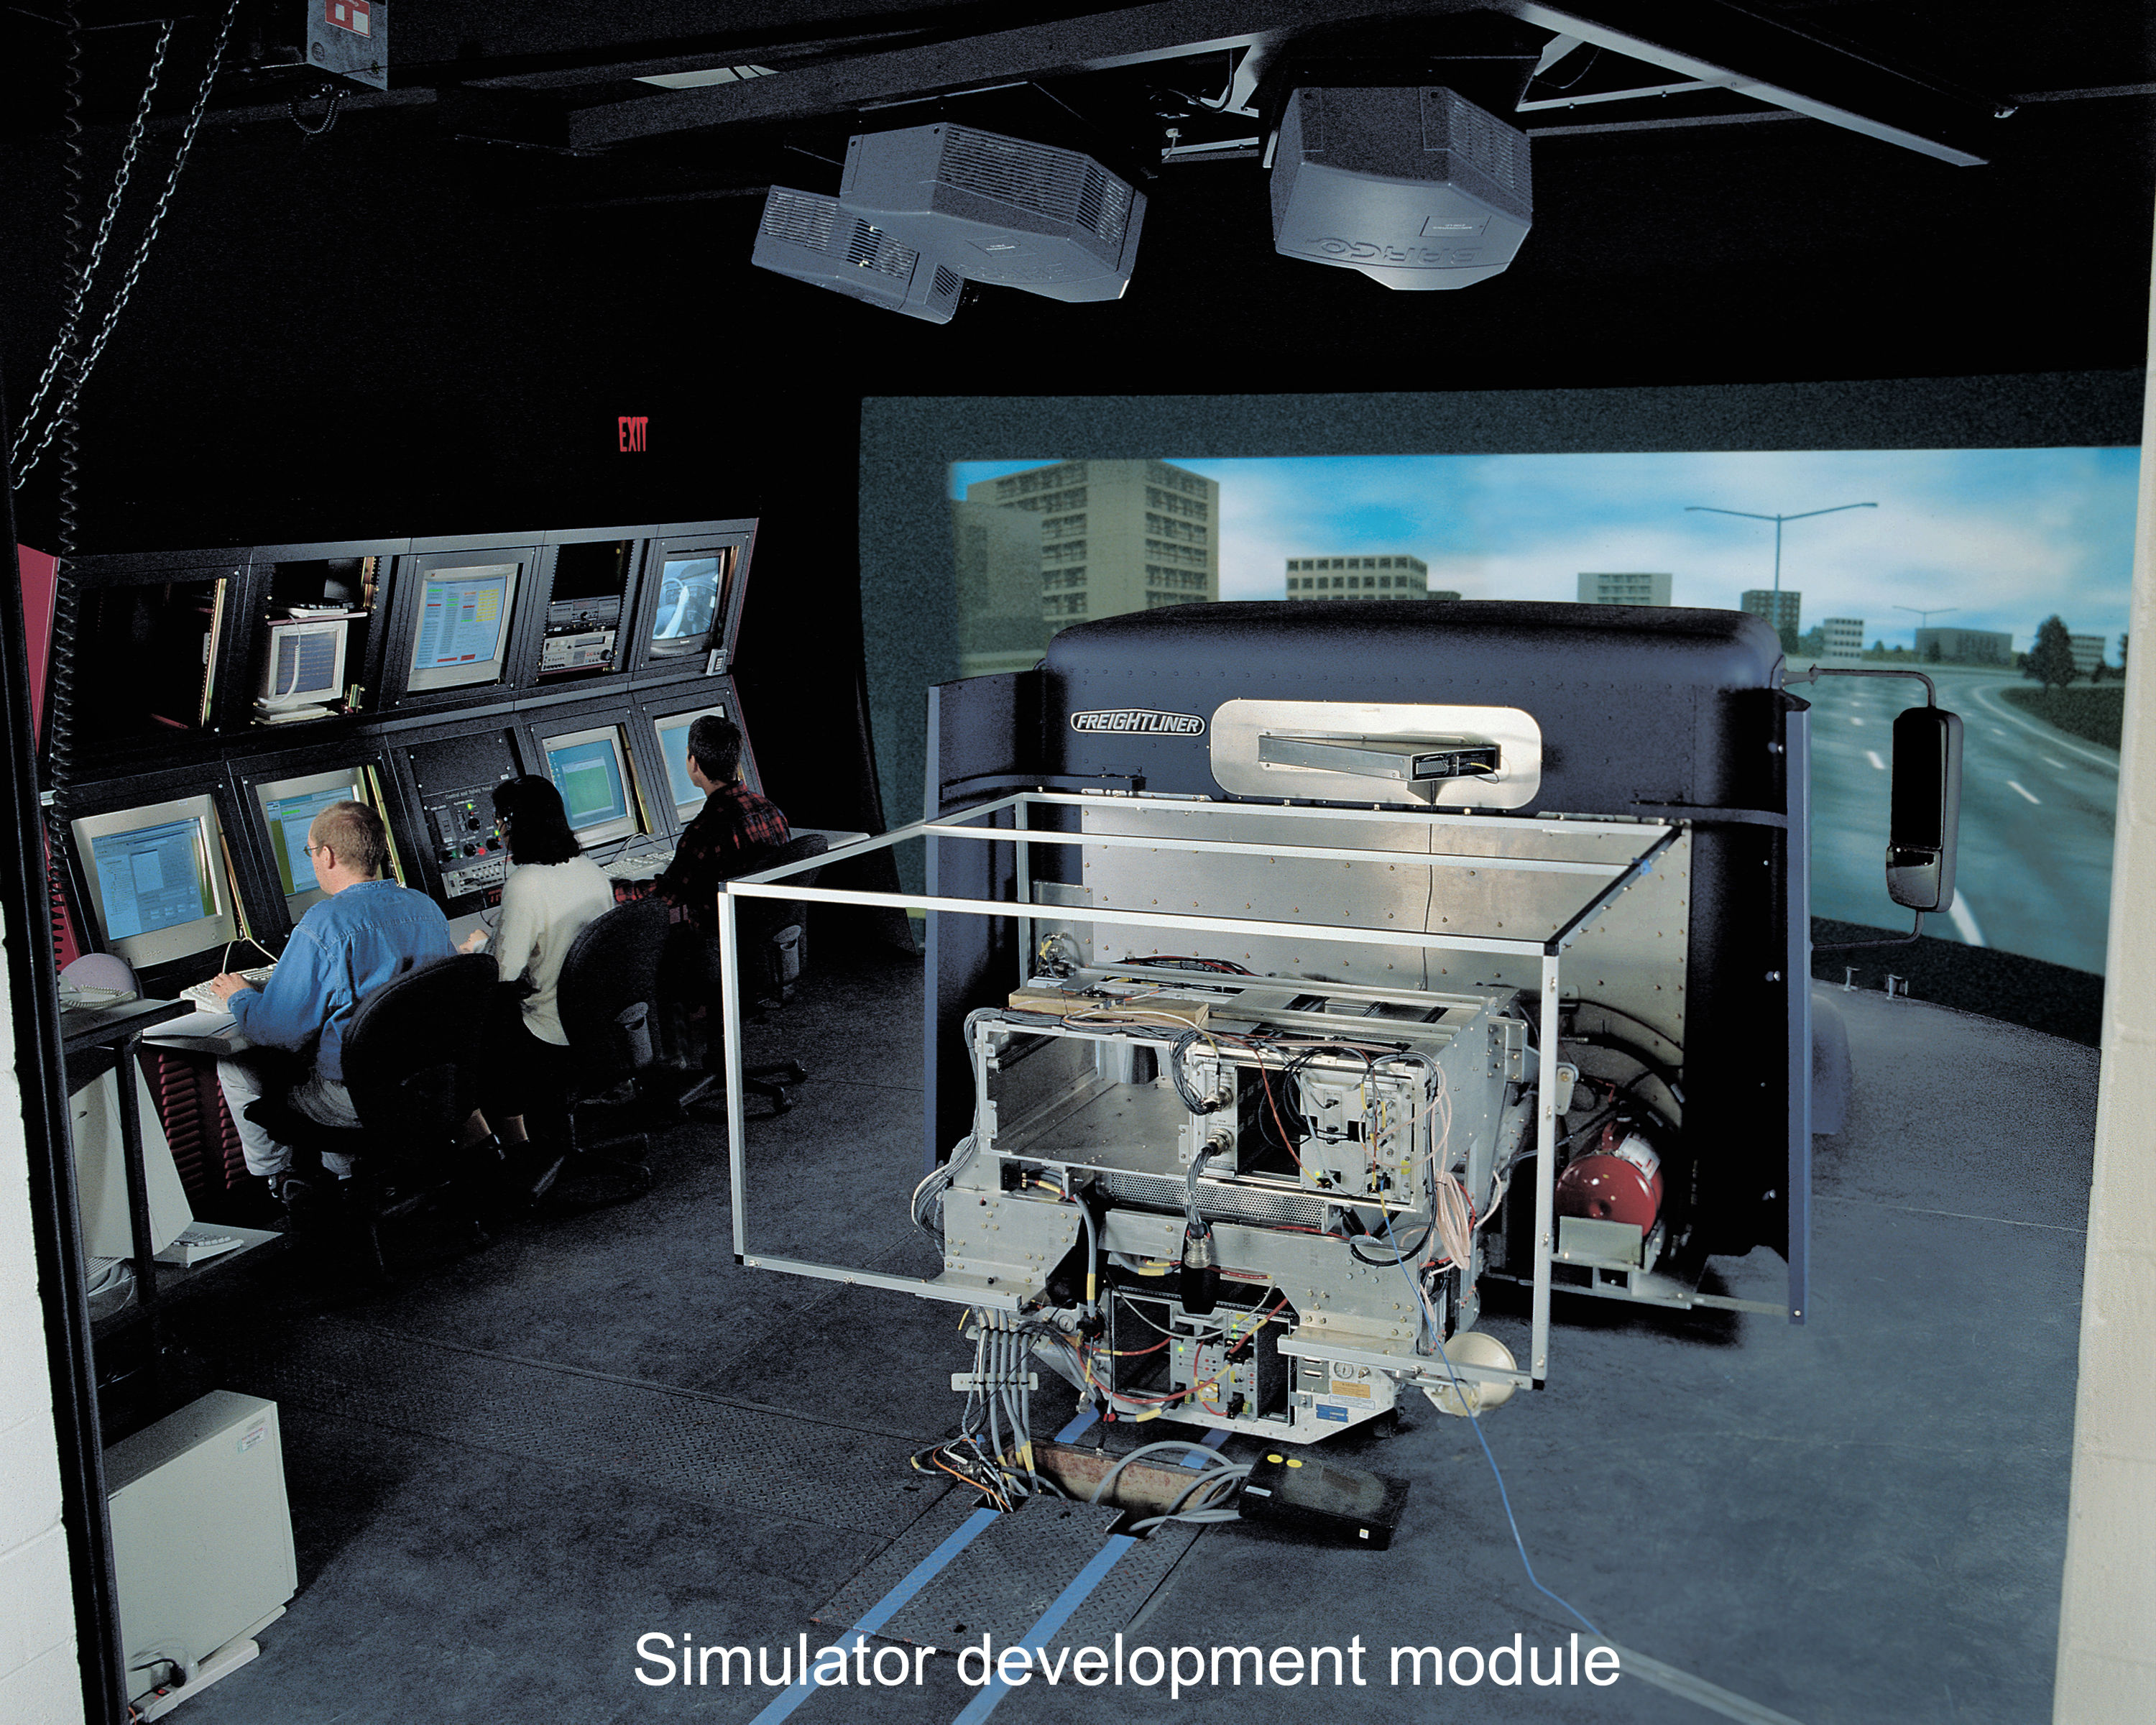 The simulation development module